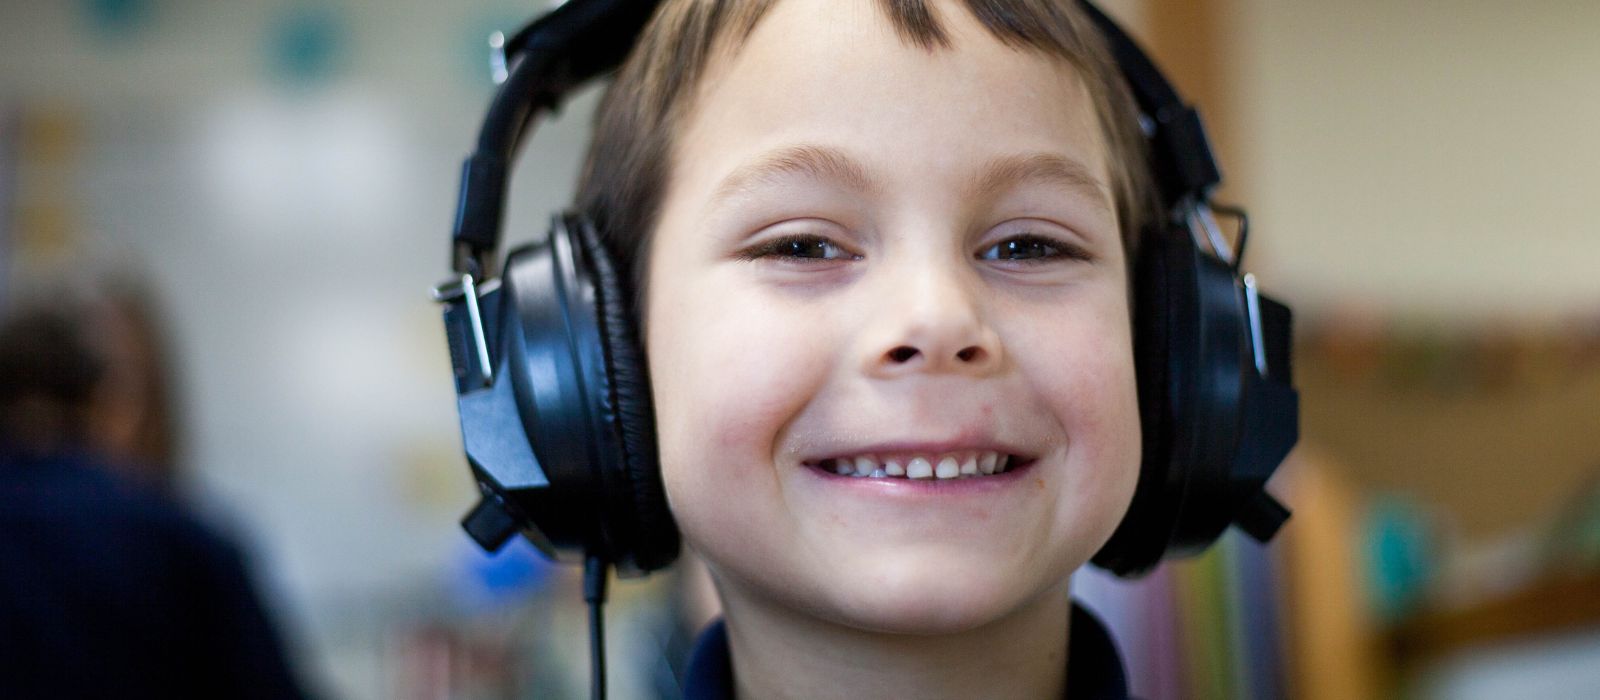 boy-auditory-training-program-headphones_hd